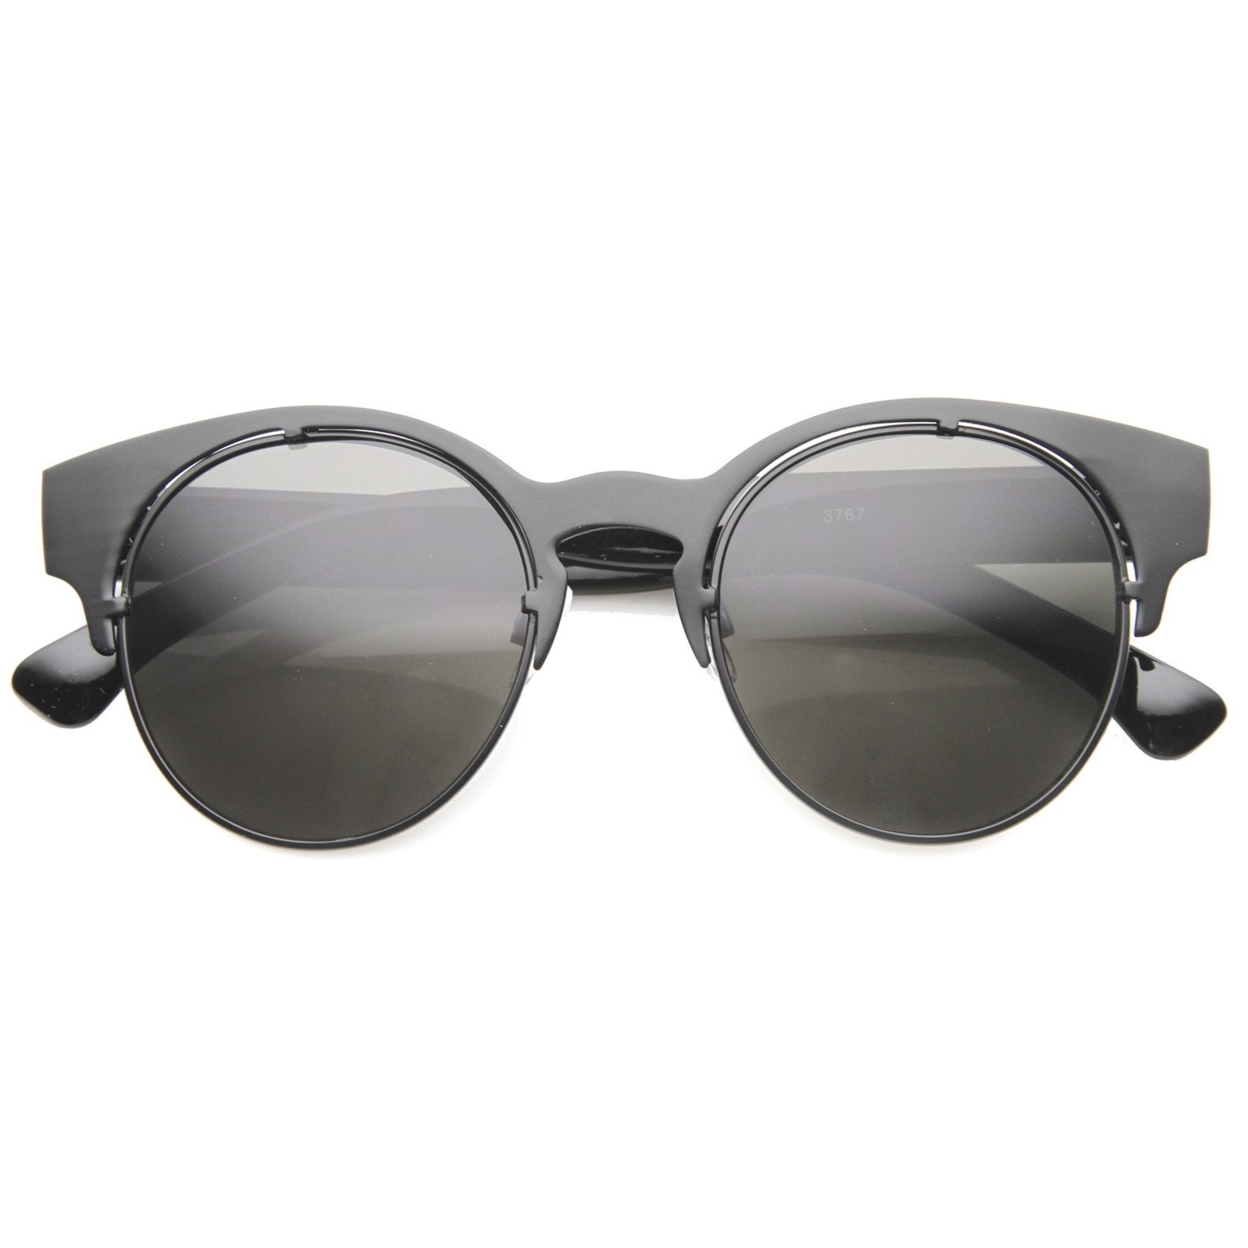 Mens Metal Semi-Rimless Sunglasses With UV400 Protected Composite Lens - Gunmetal-Black / Green